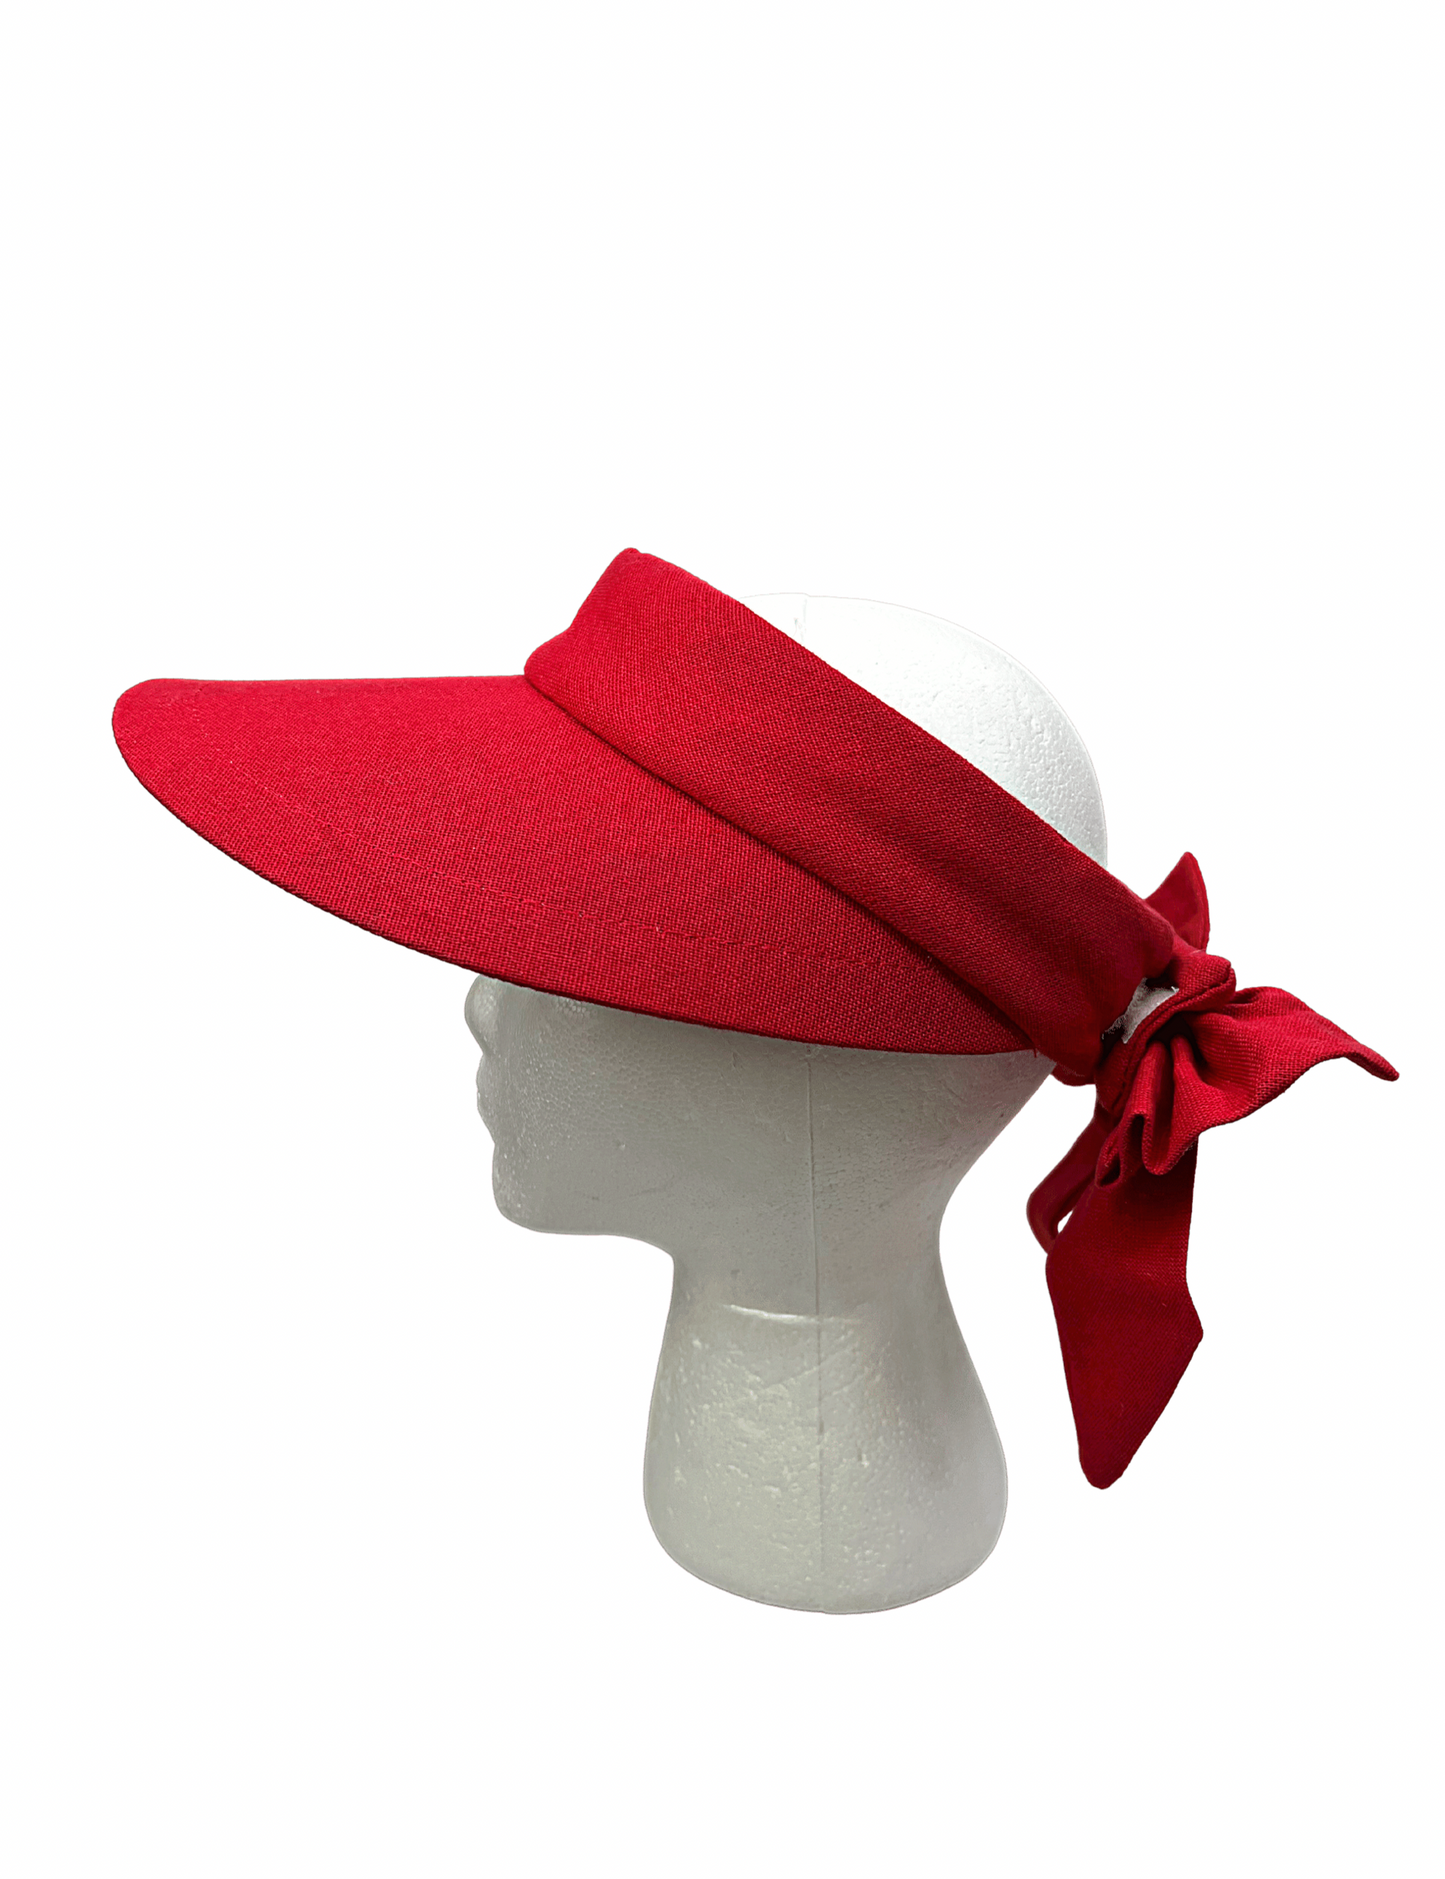 90’s Red Bow Cotton Sun Hat Visor